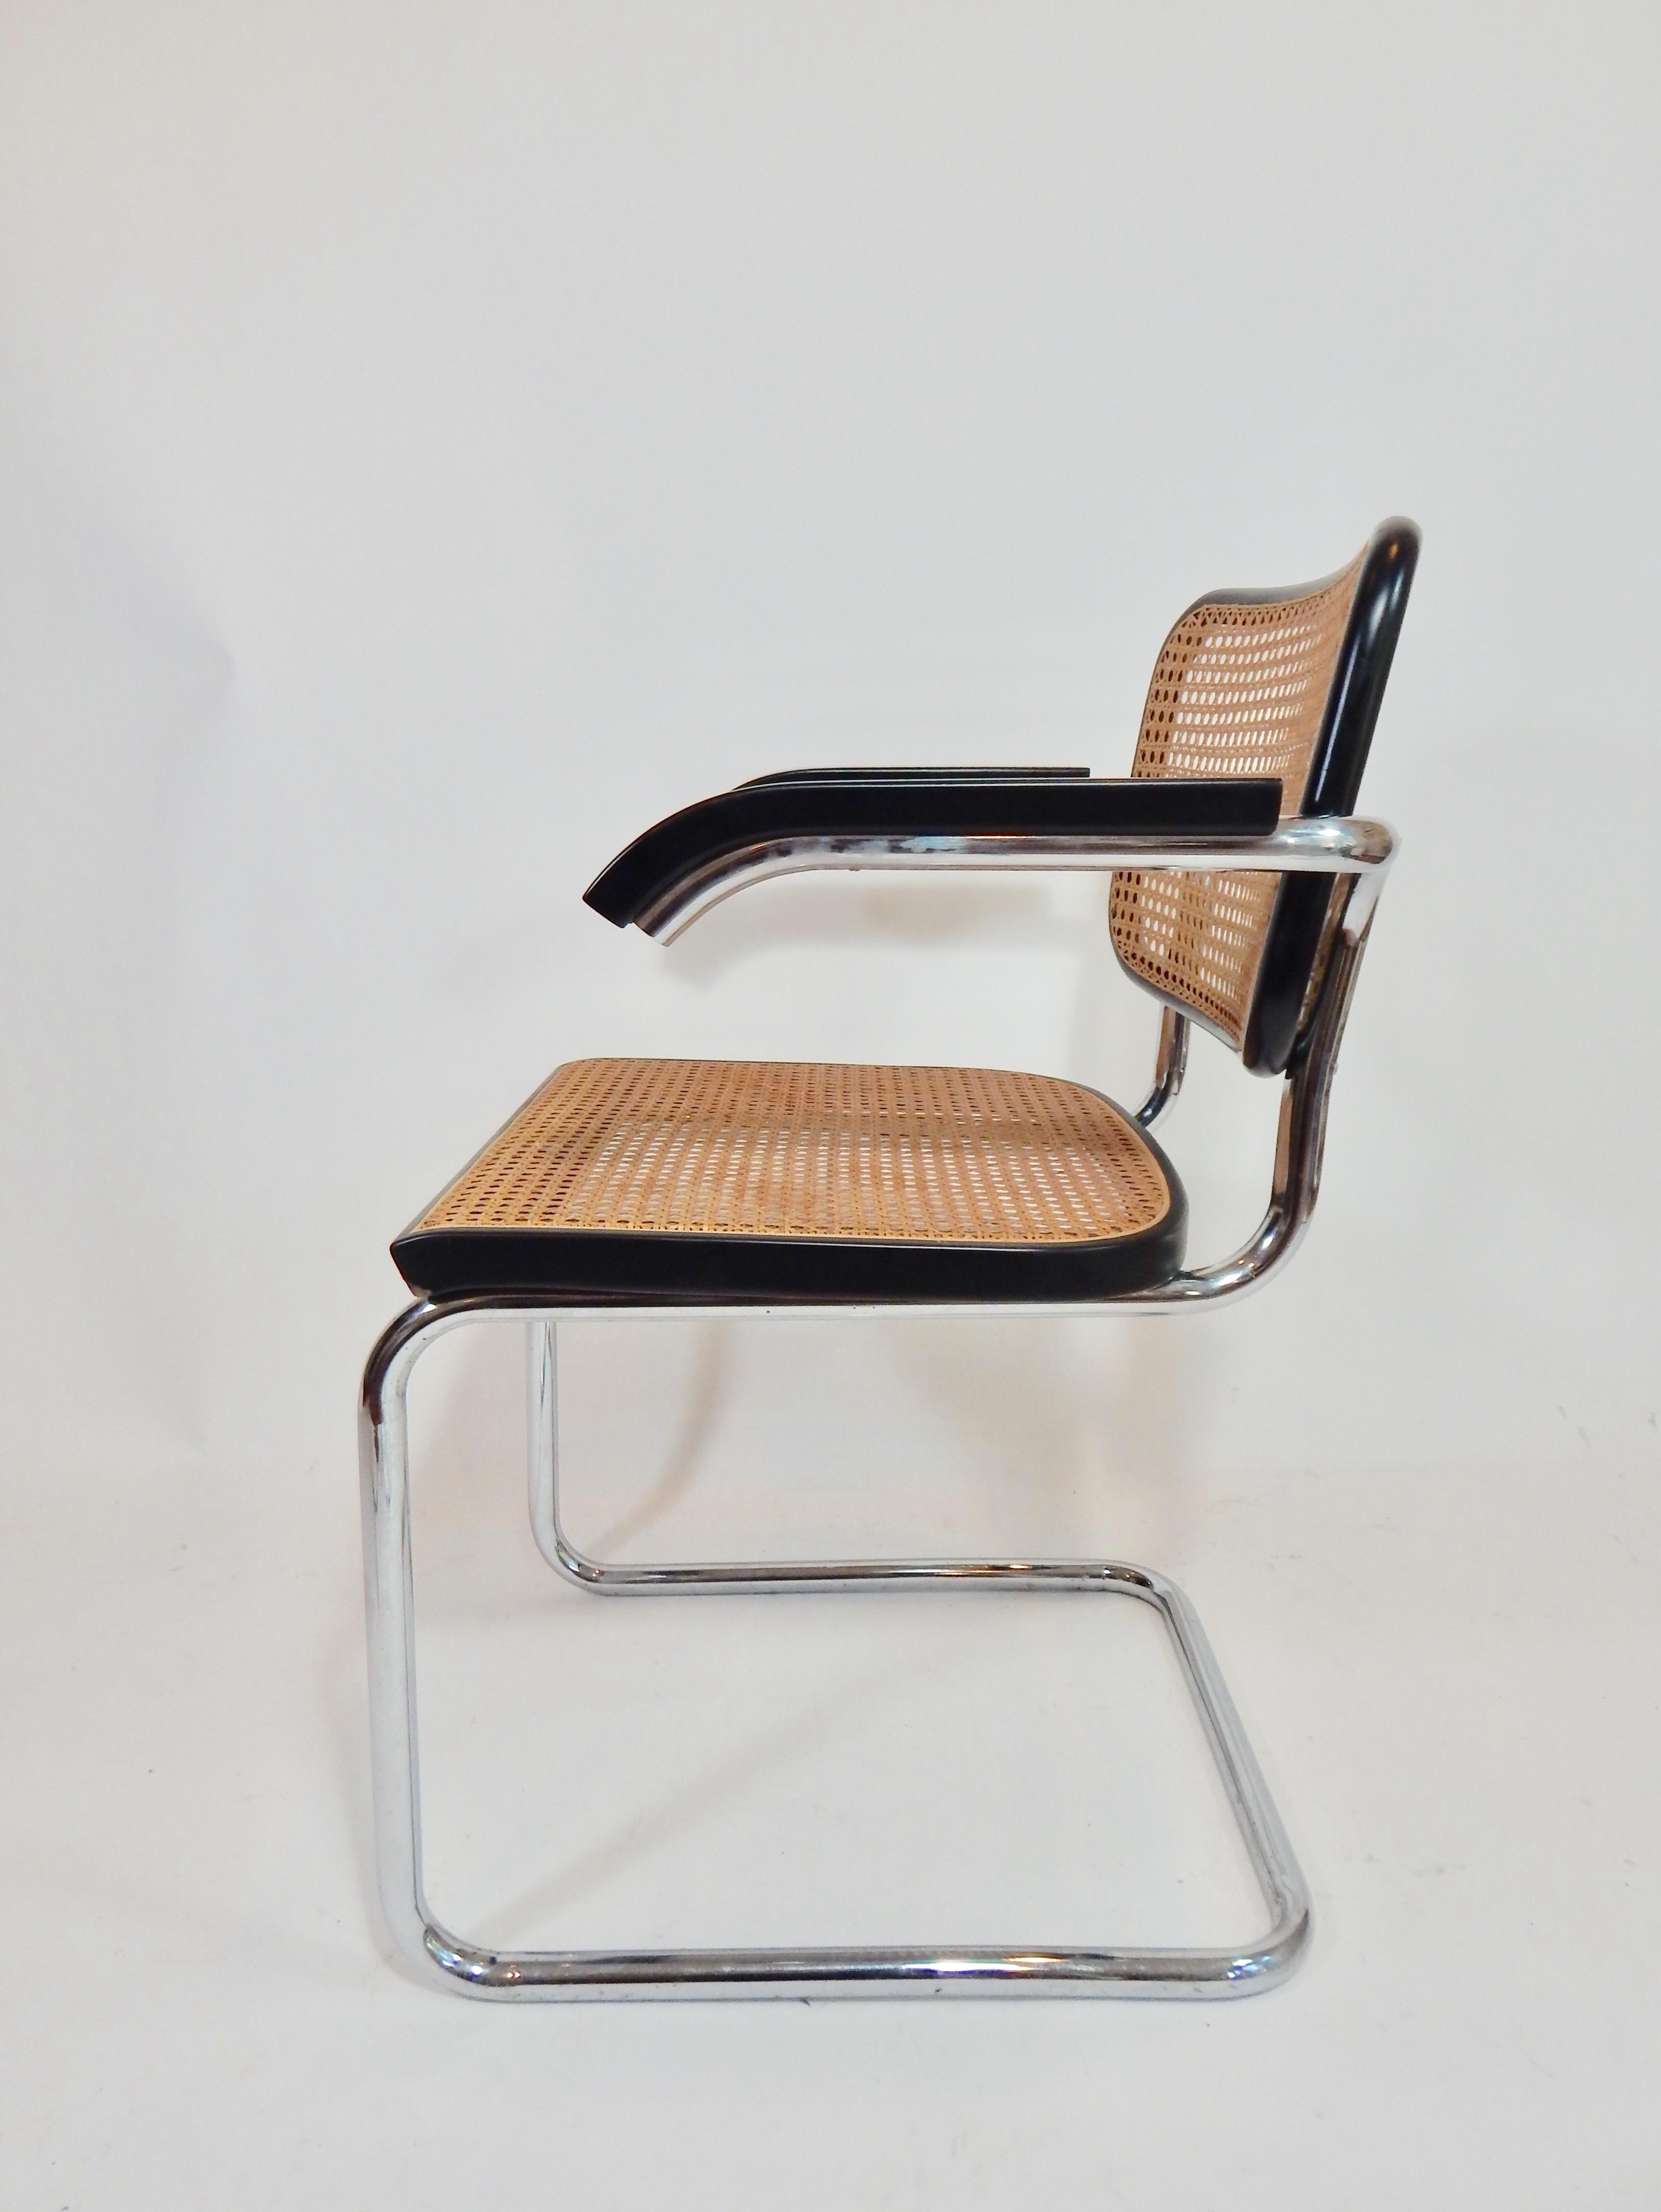 Cane Marcel Breuer Cesca Chair by Knoll